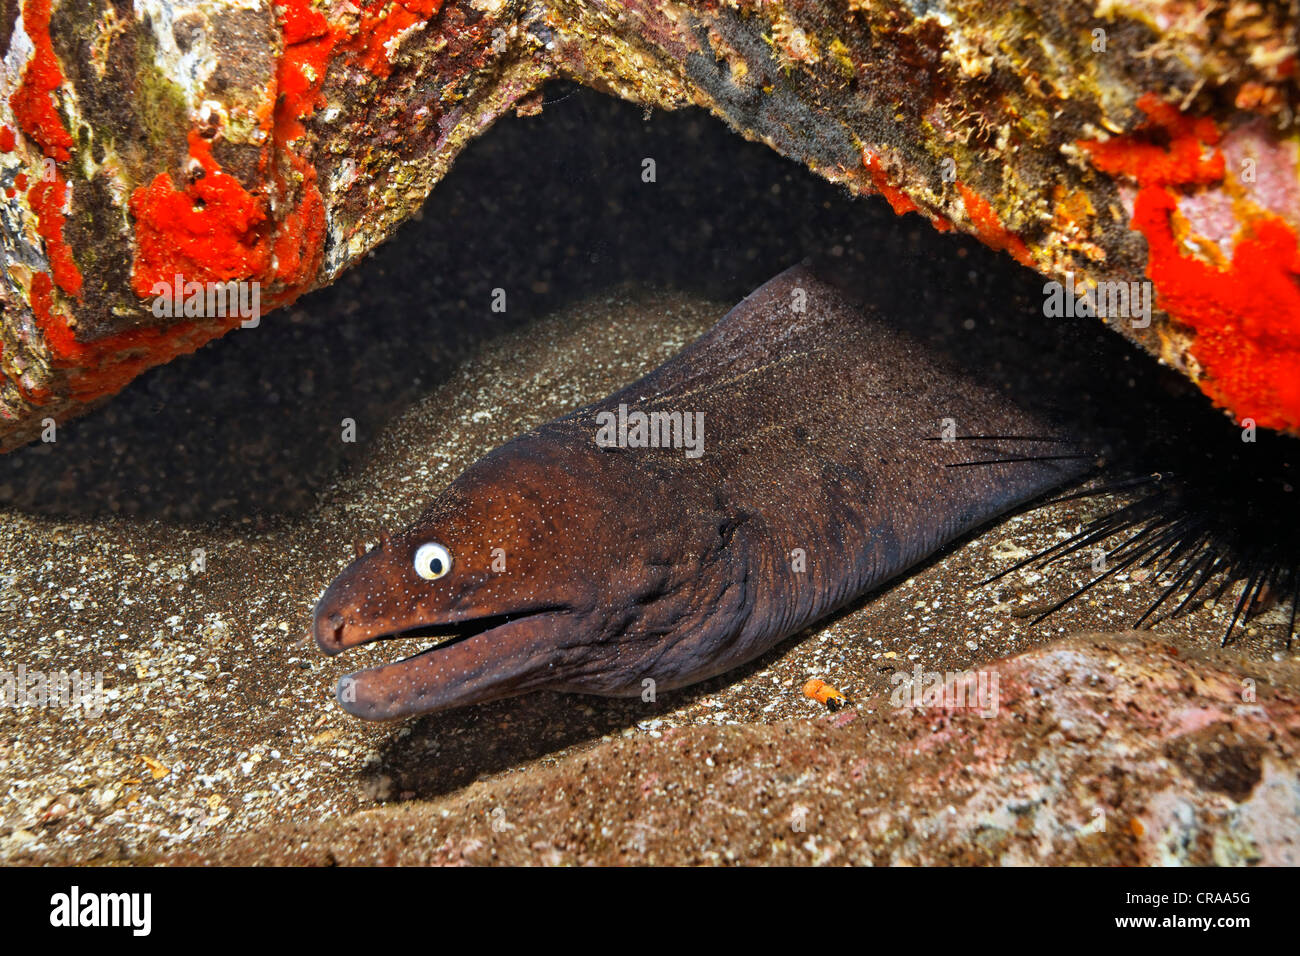 Dotted Moray Eel (Muraena augusti) in its hideaway, Madeira, Portugal, Europe, Atlantic Ocean Stock Photo